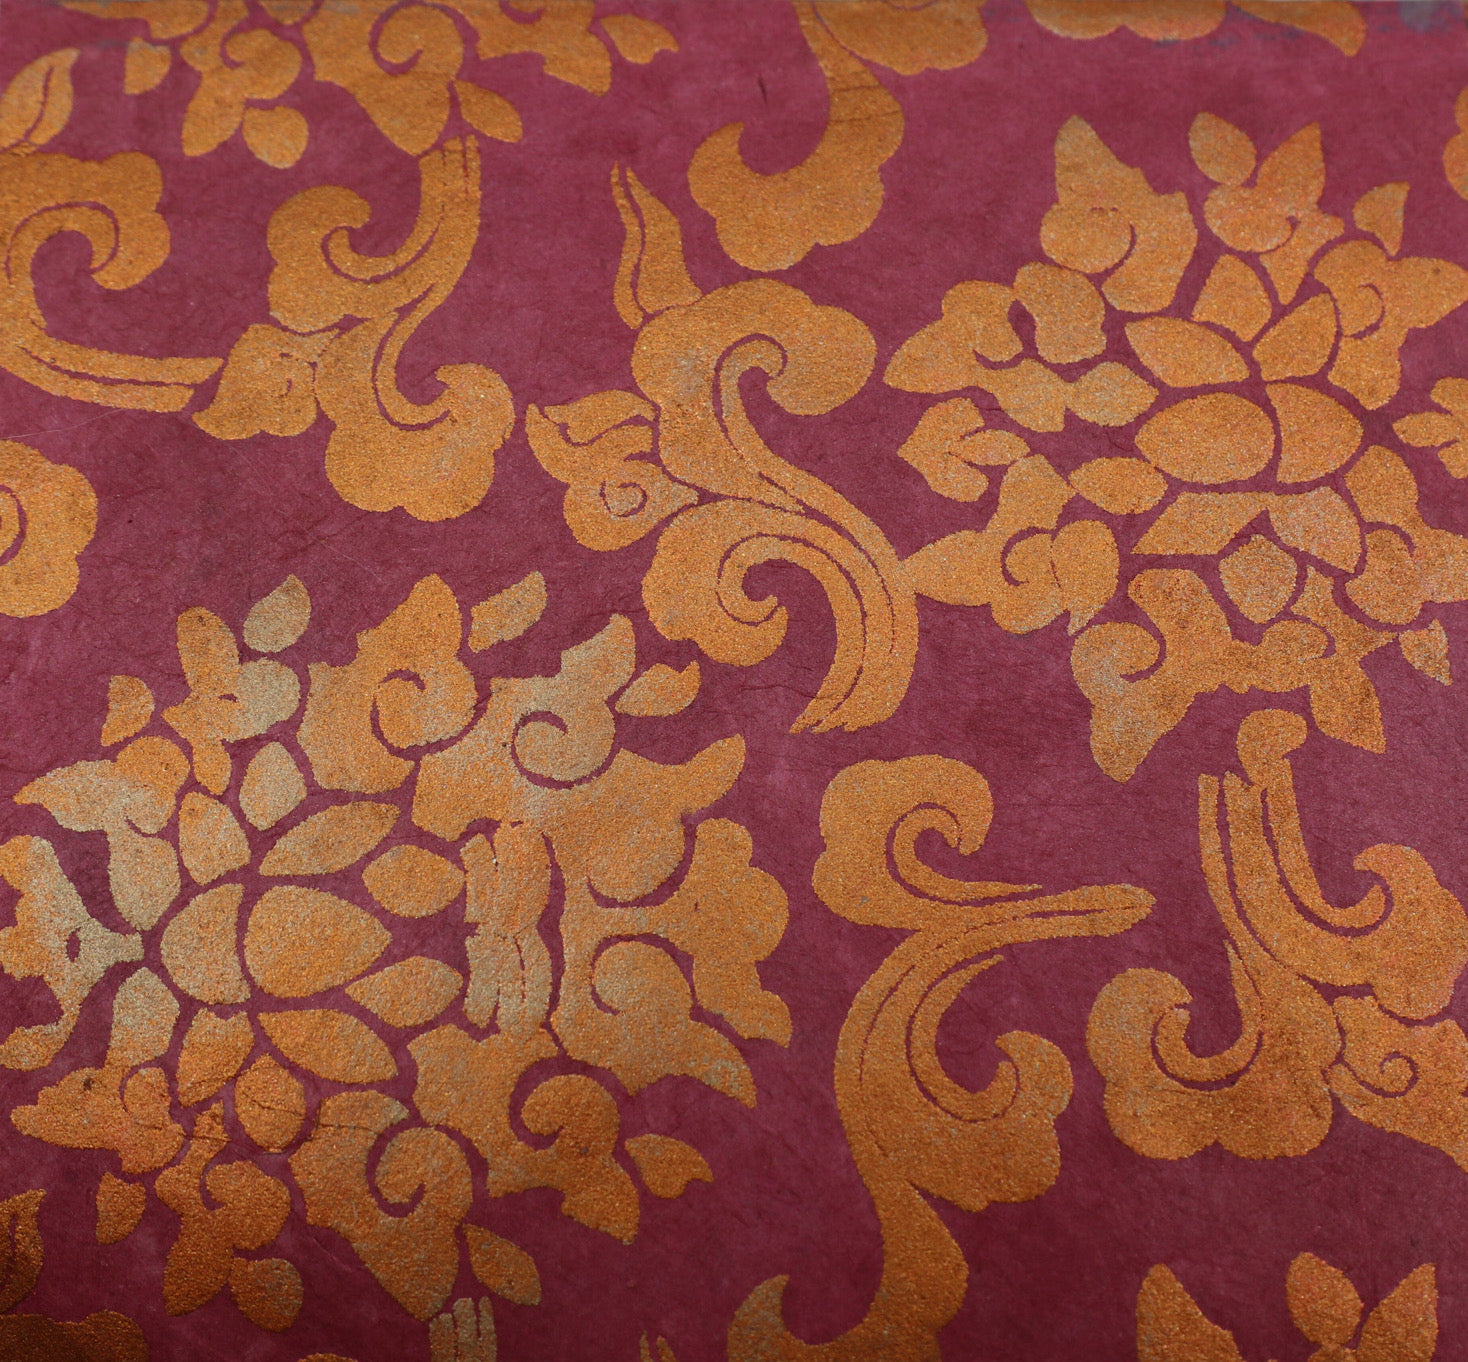 Tibetan Paper & Handicraft - Himalayan Lokta paper - Pema/Tibetan Lotus print - 20x30" (4558769782871)